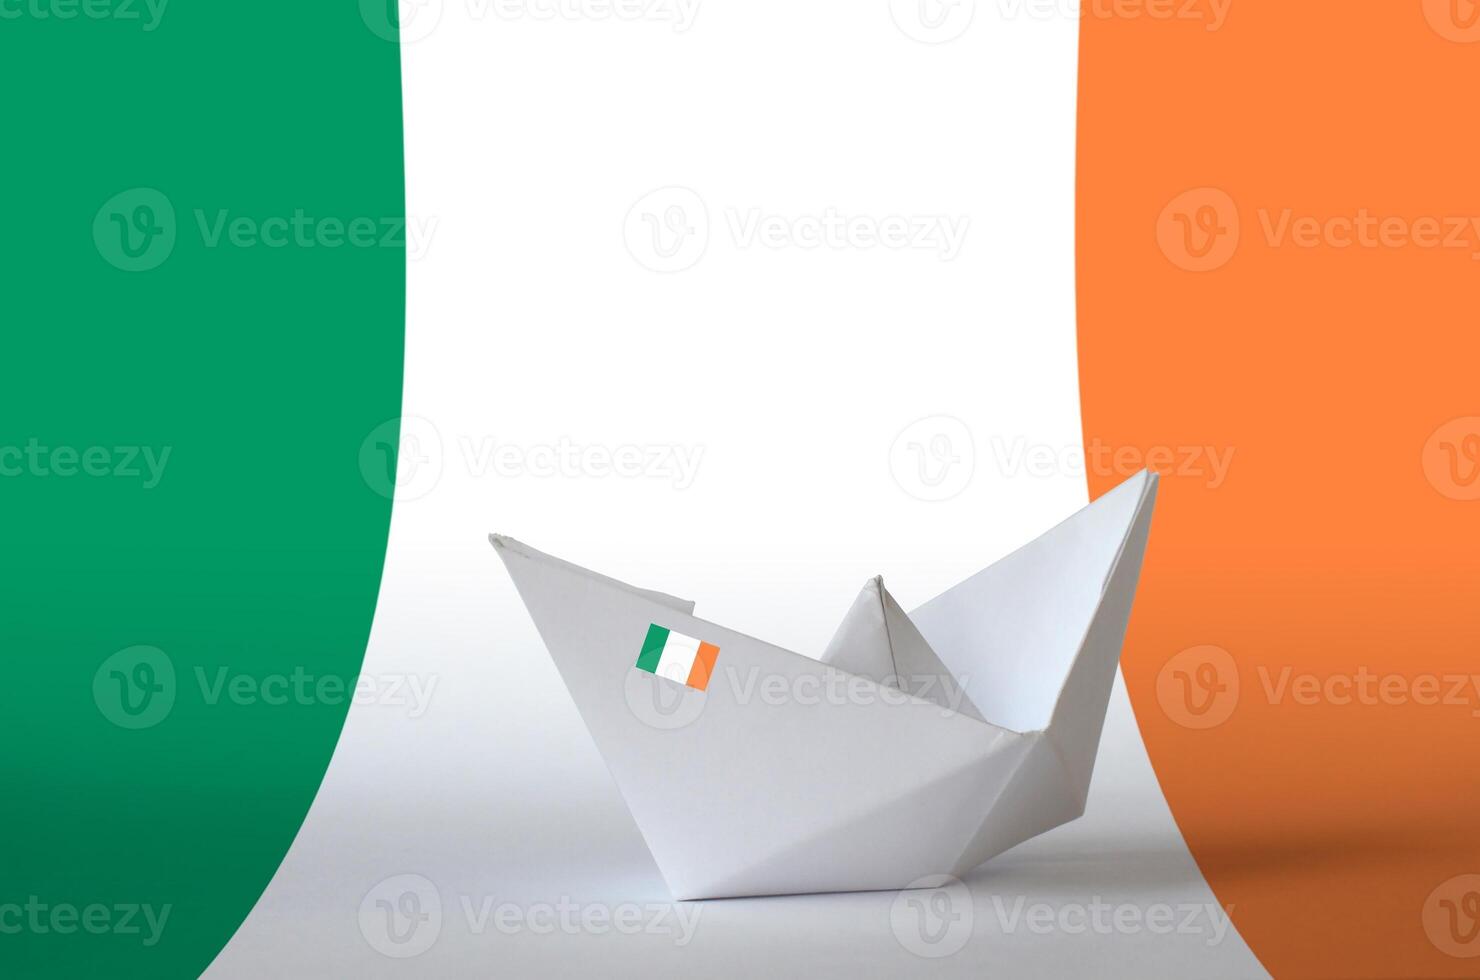 Ireland flag depicted on paper origami ship closeup. Handmade arts concept photo